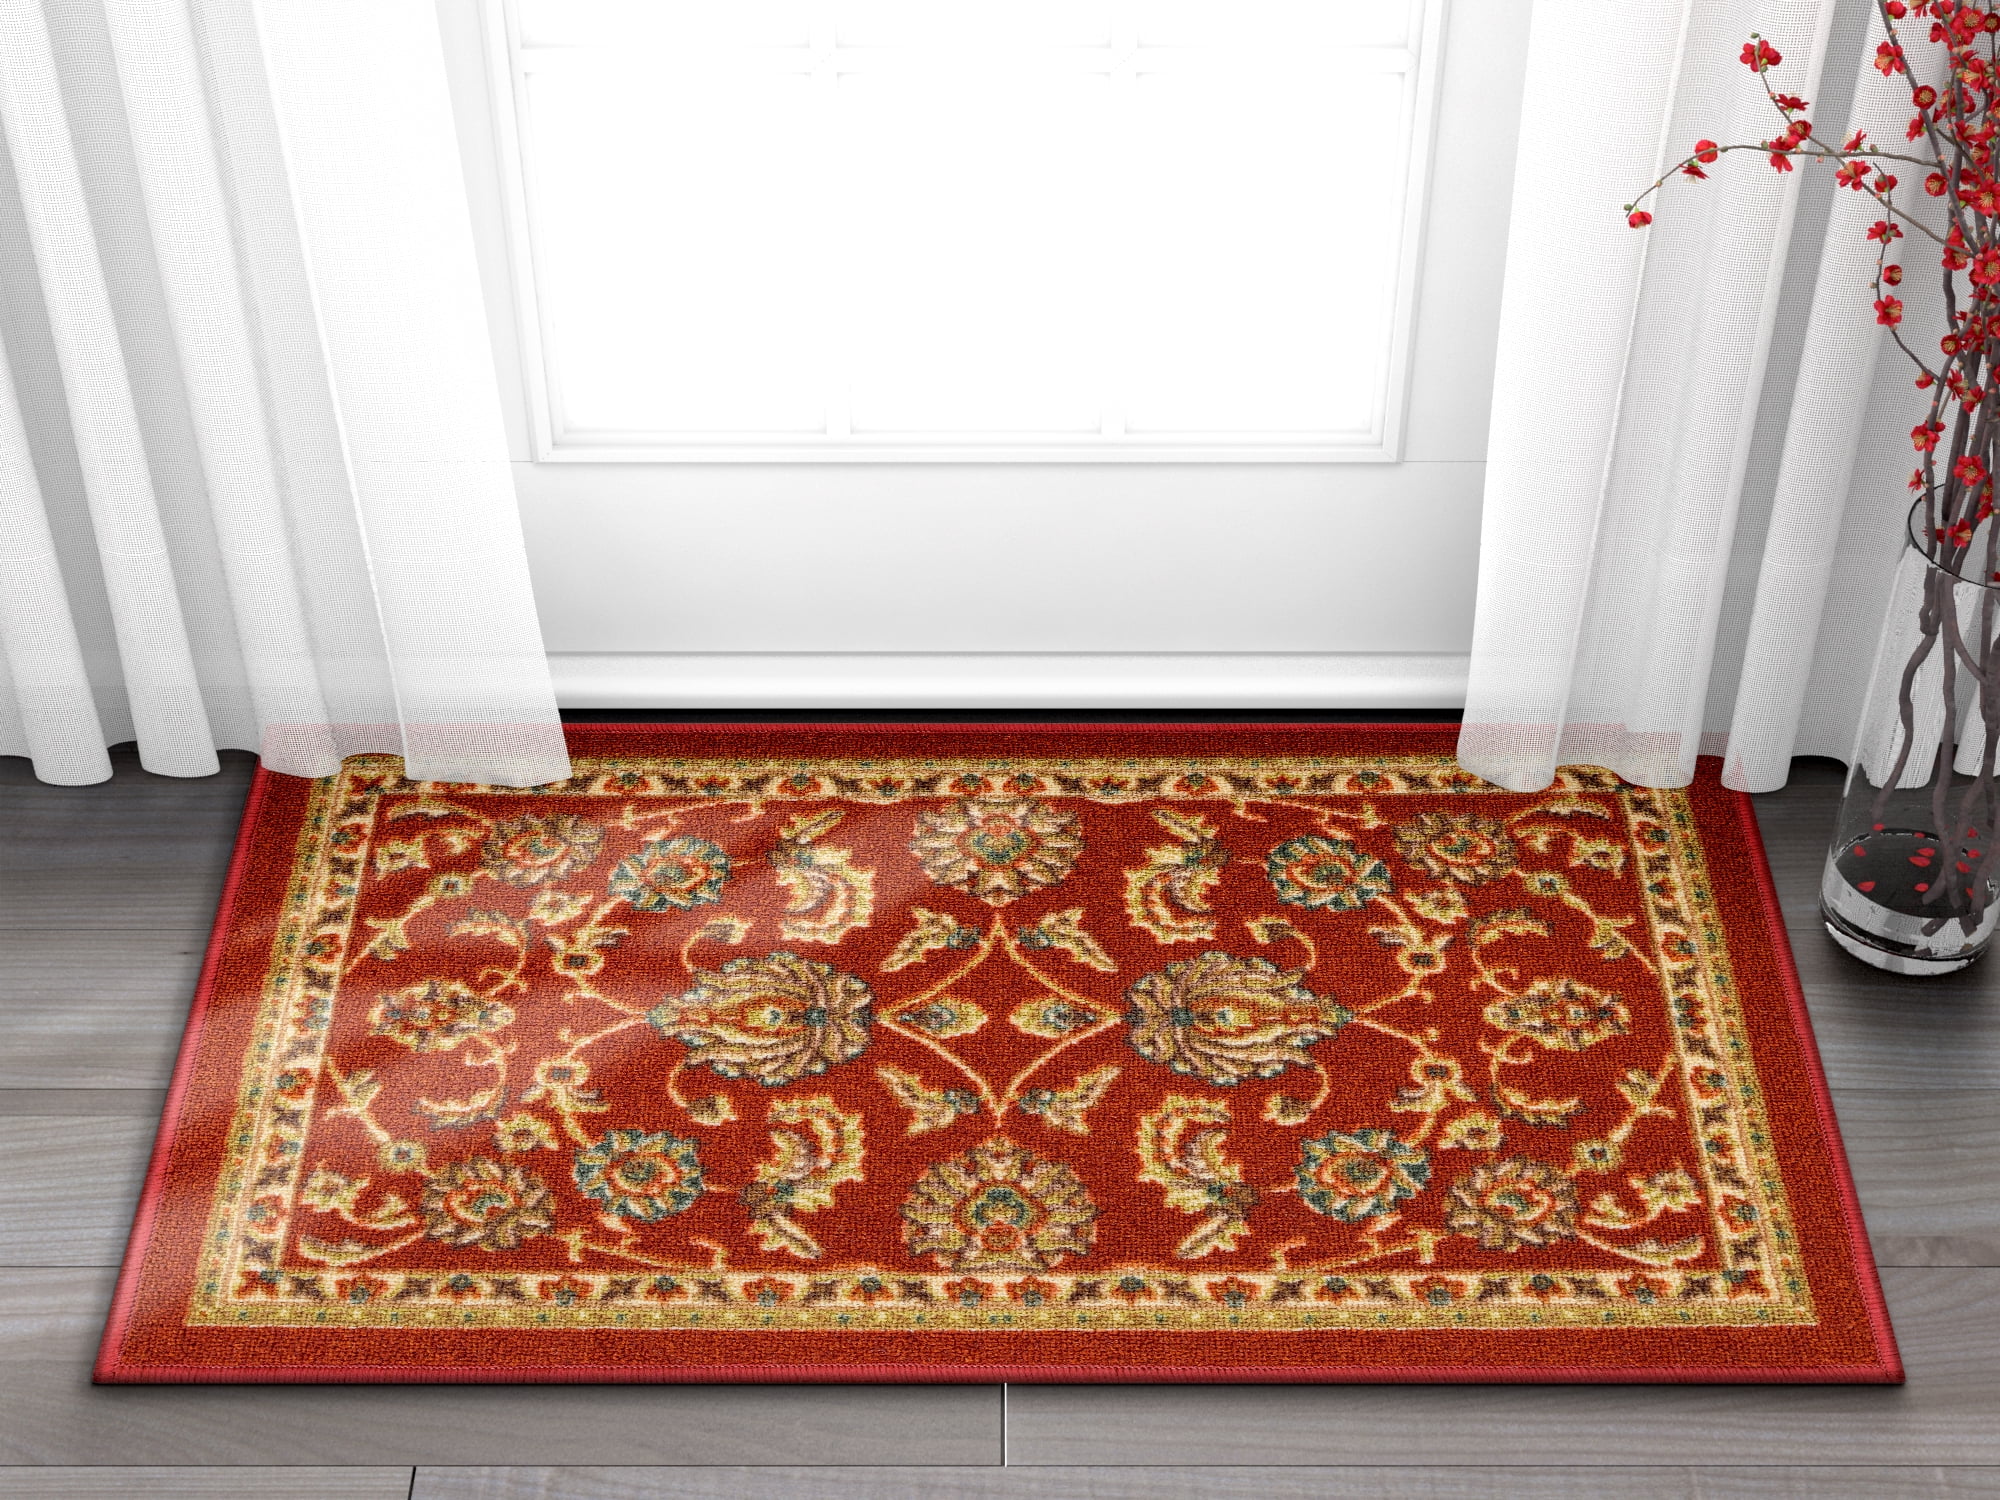 Kitchen, Bathroom or Door Entry Rug Set - 20 x 31 & 20 x 31 Red, B –  In-Weave Rugs